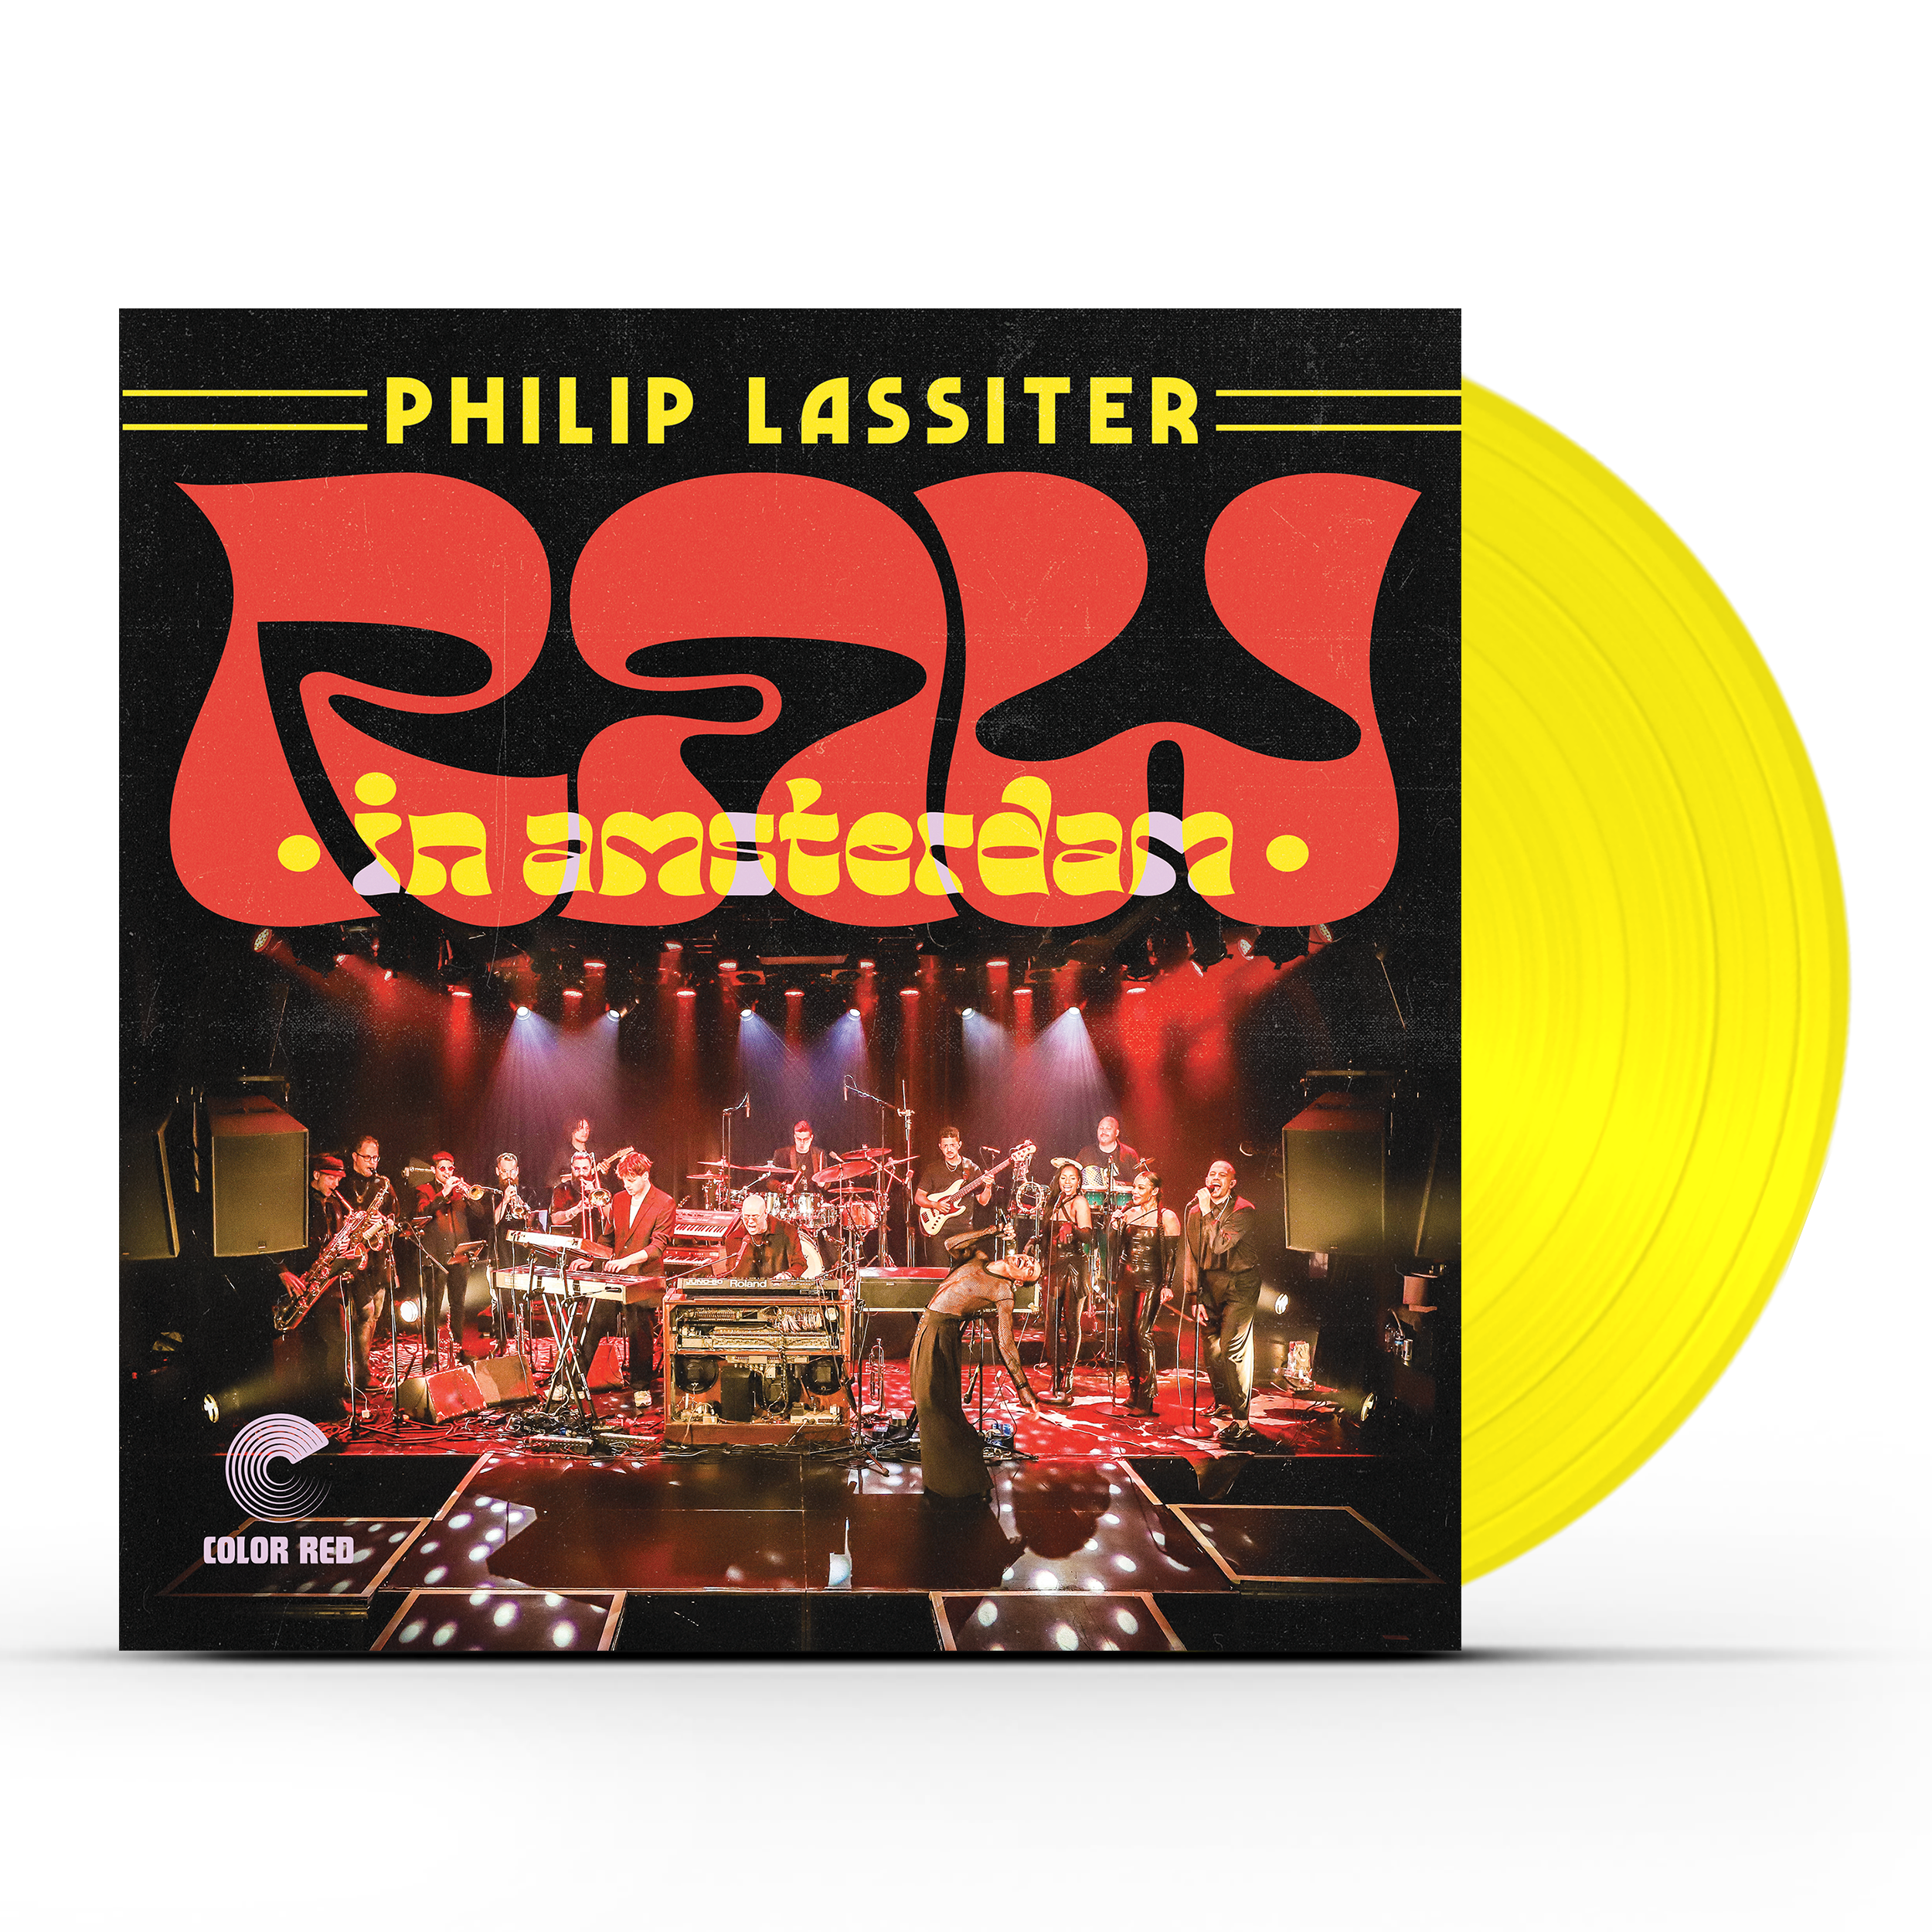 PRE-ORDER: Philip Lassiter - Raw In Amsterdam (LP)